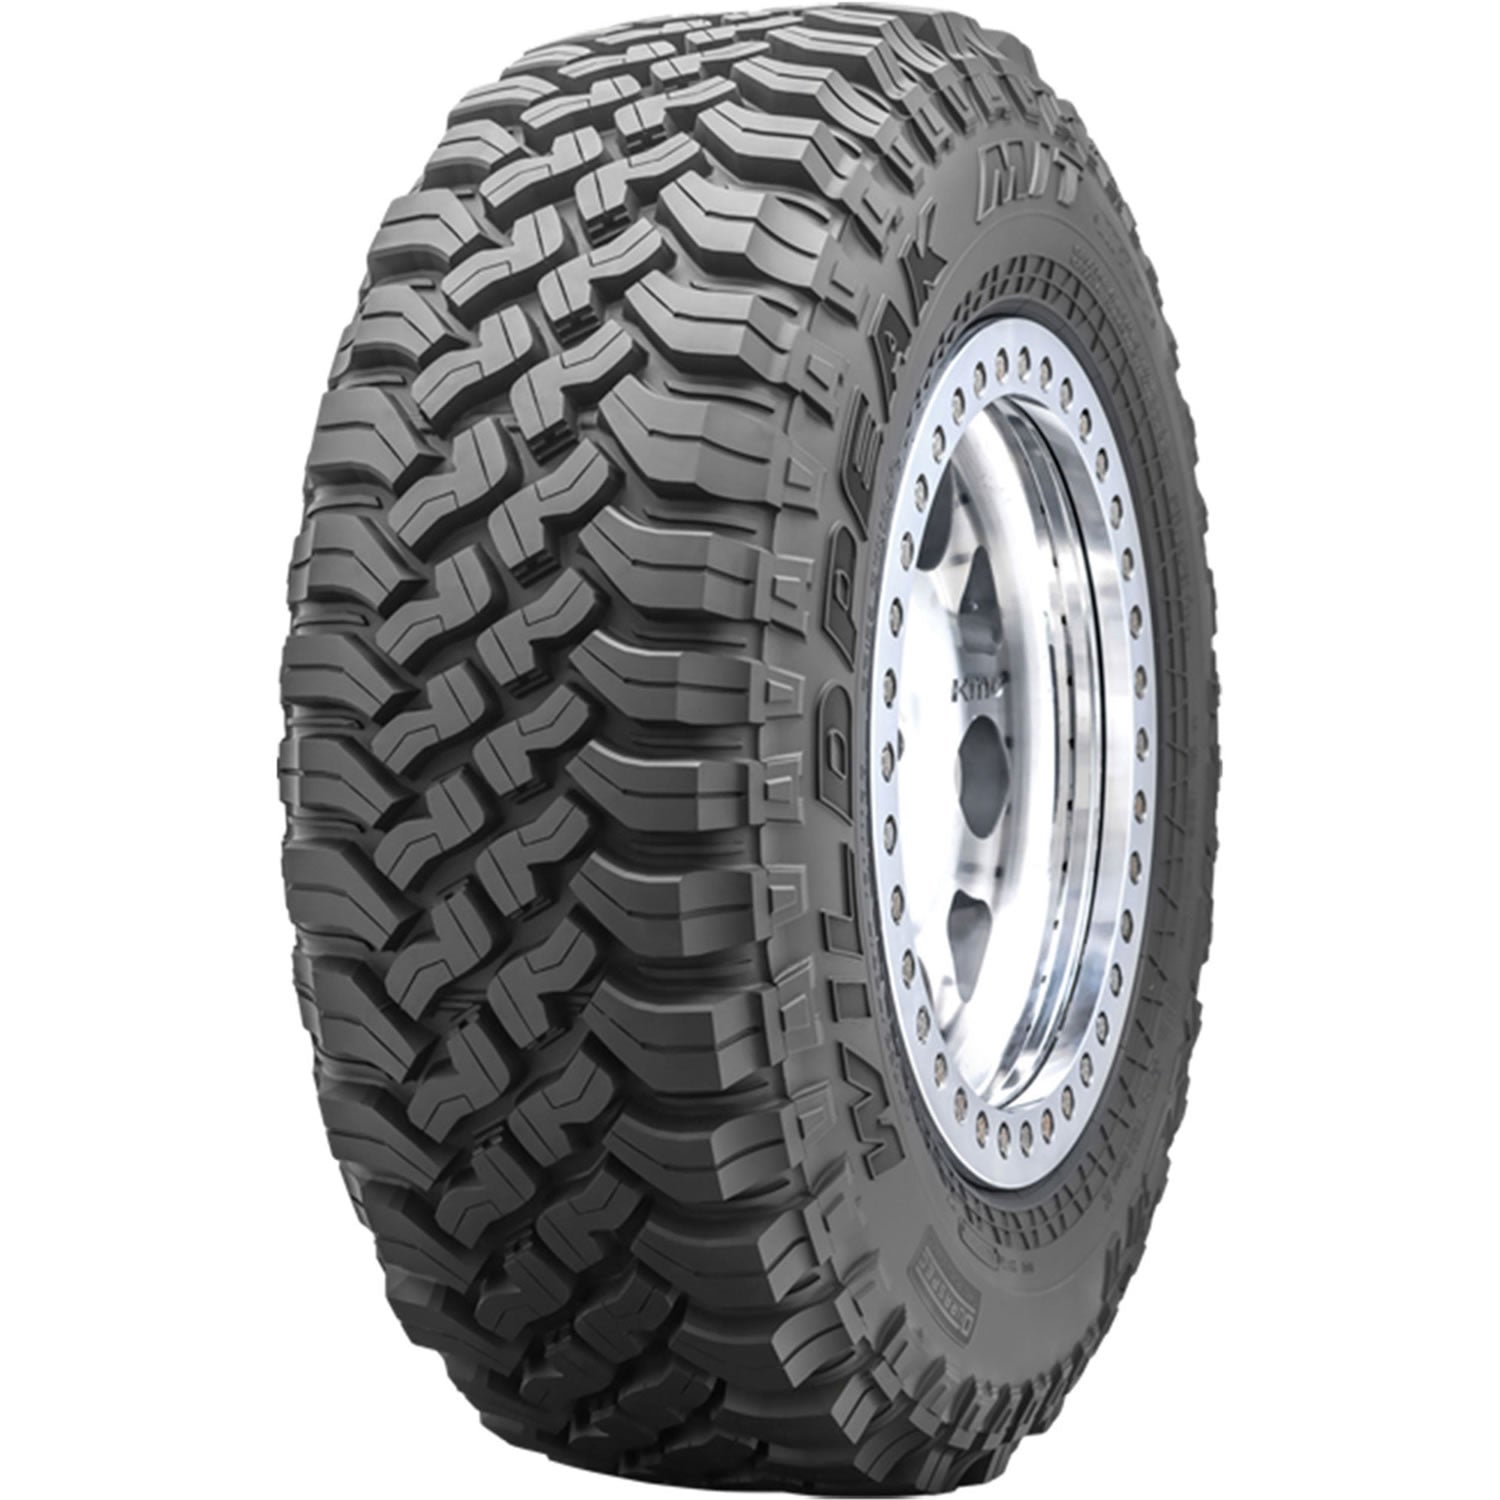 FALKEN WILDPEAK MT LT245/75R16 (30.4X7.8R 16) Tires